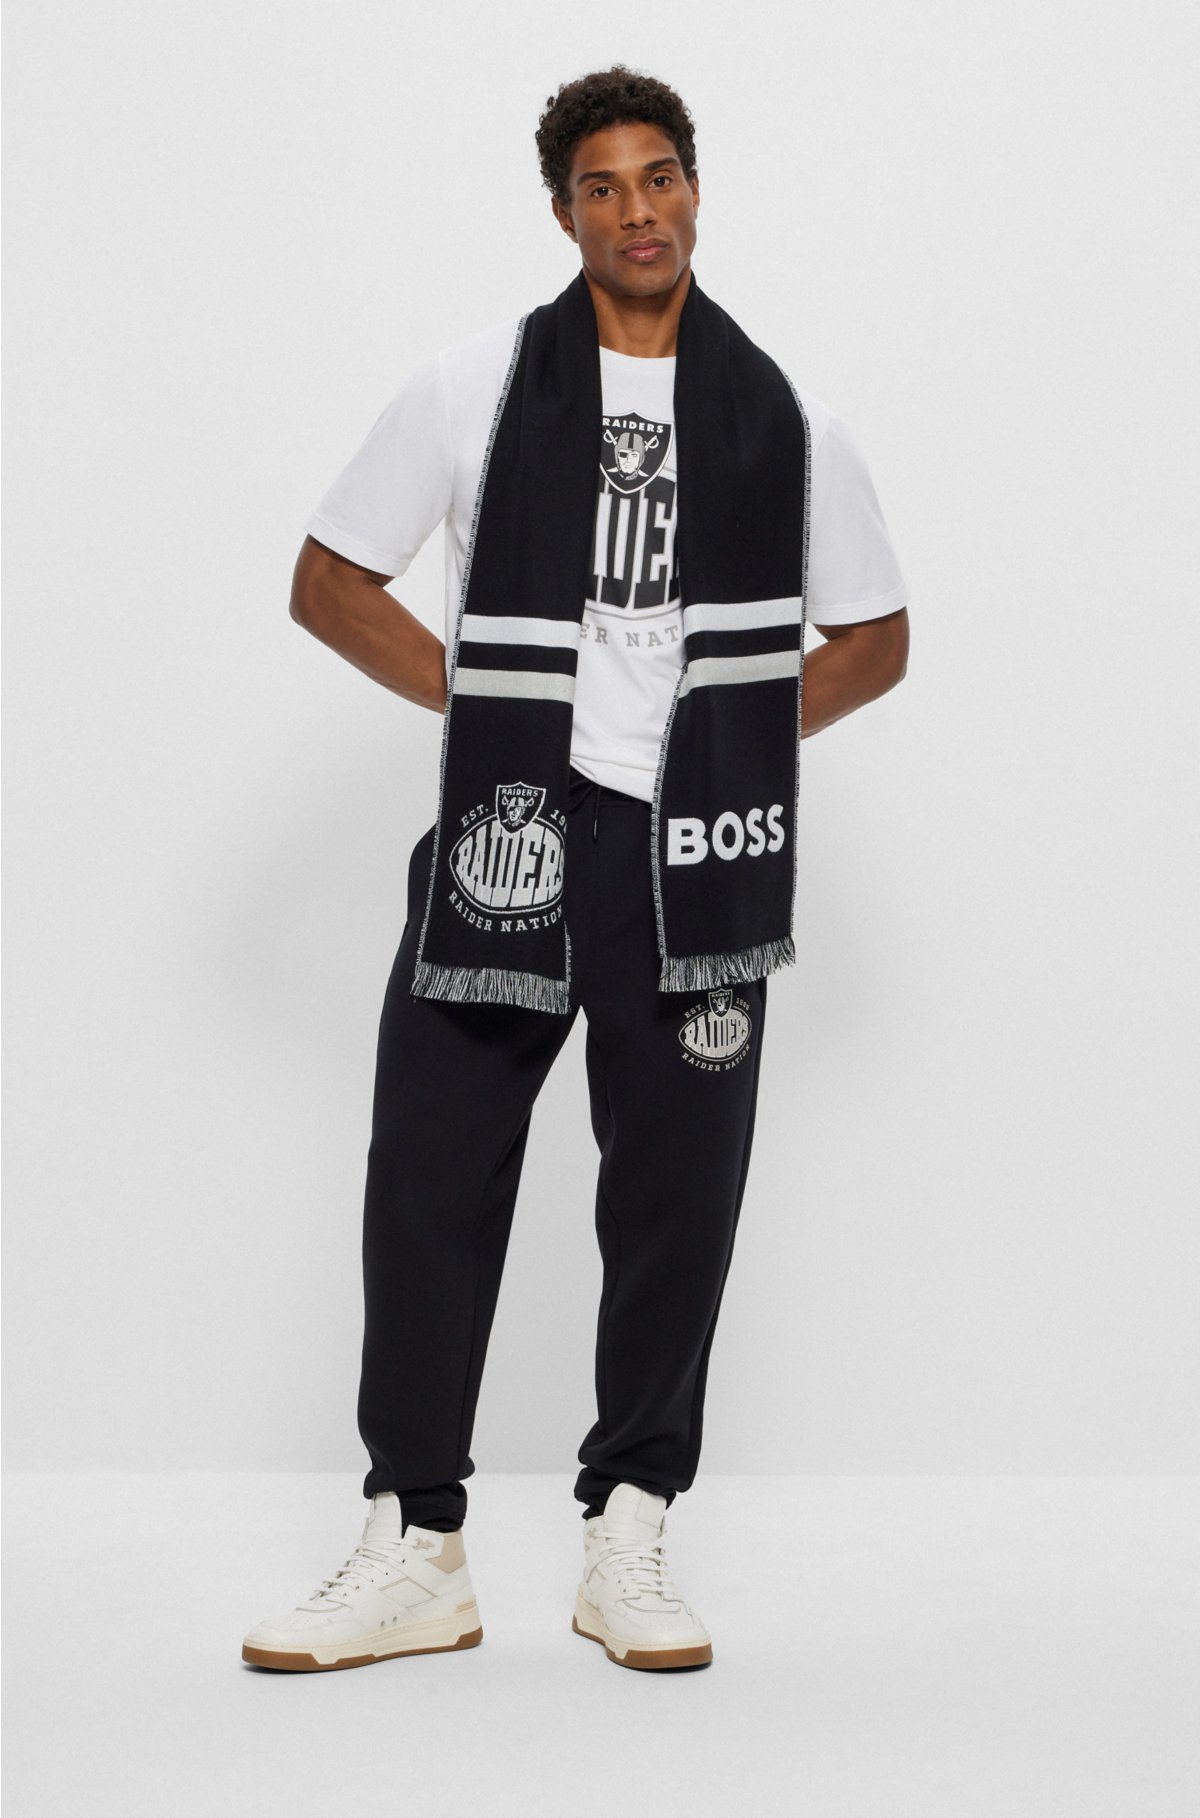 BOSS x NFL logo scarf with team branding, Raiders